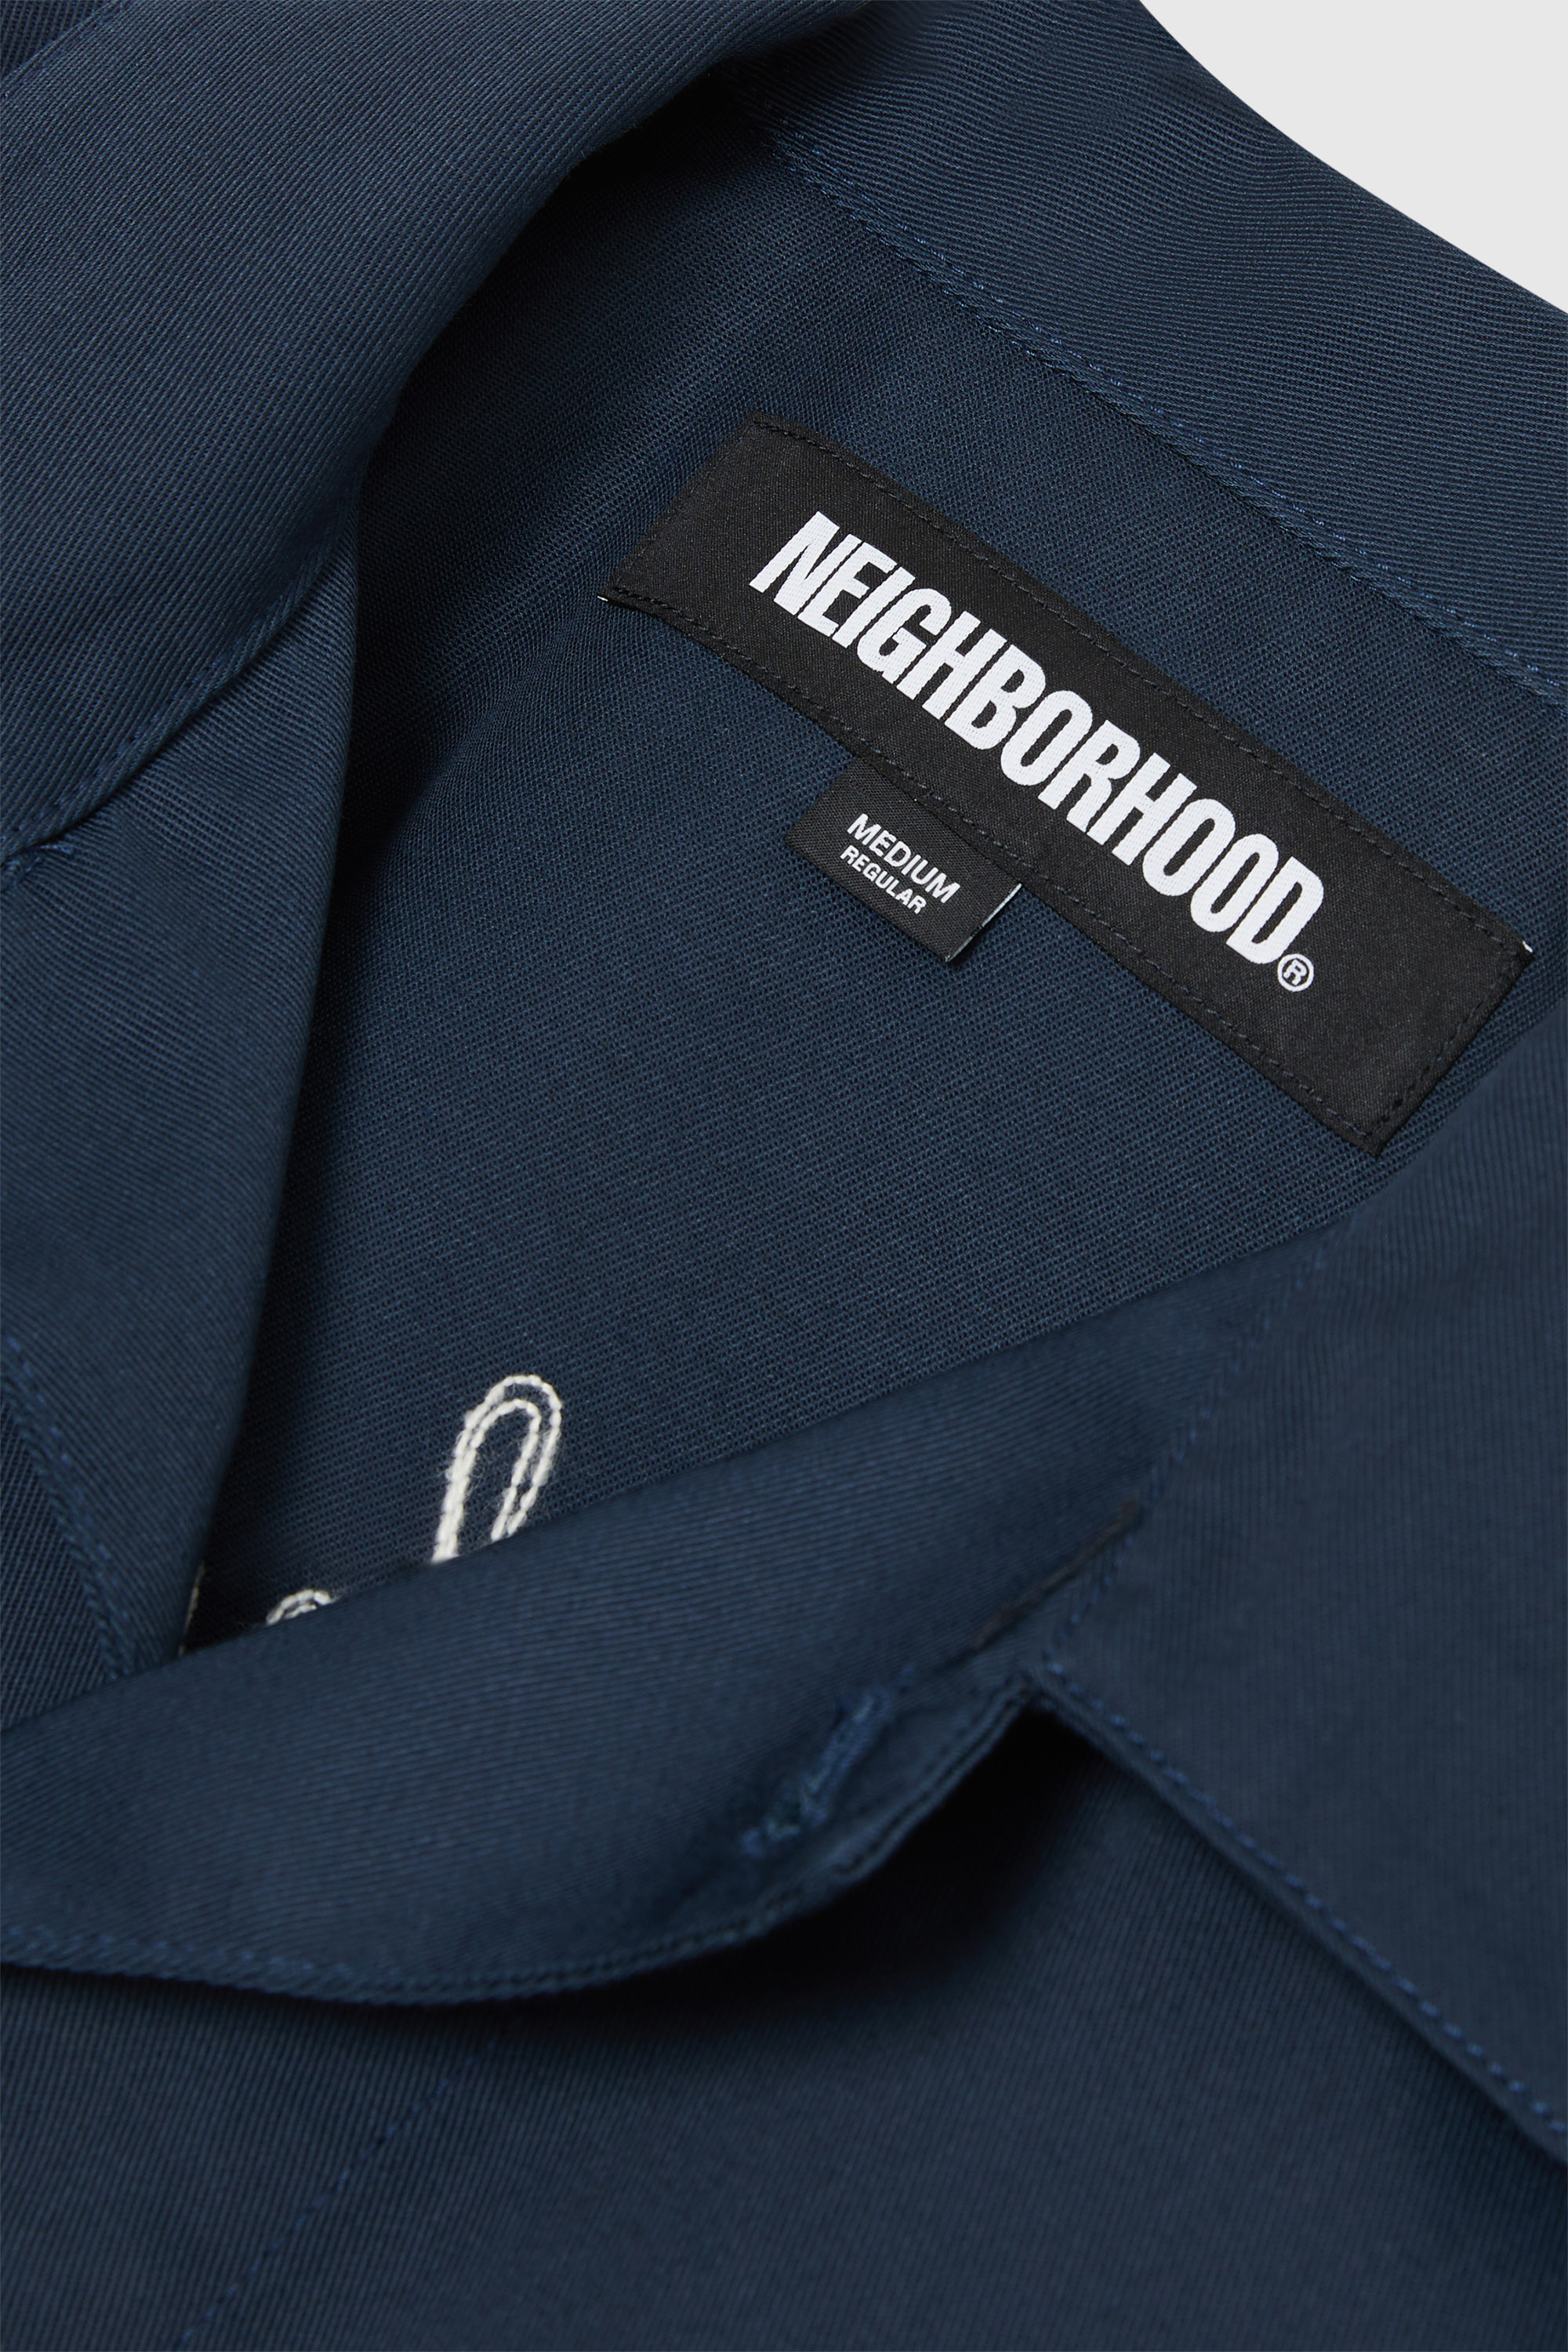 Neighborhood NH X Dickies Coverball Jacket Navy | WoodWood.com